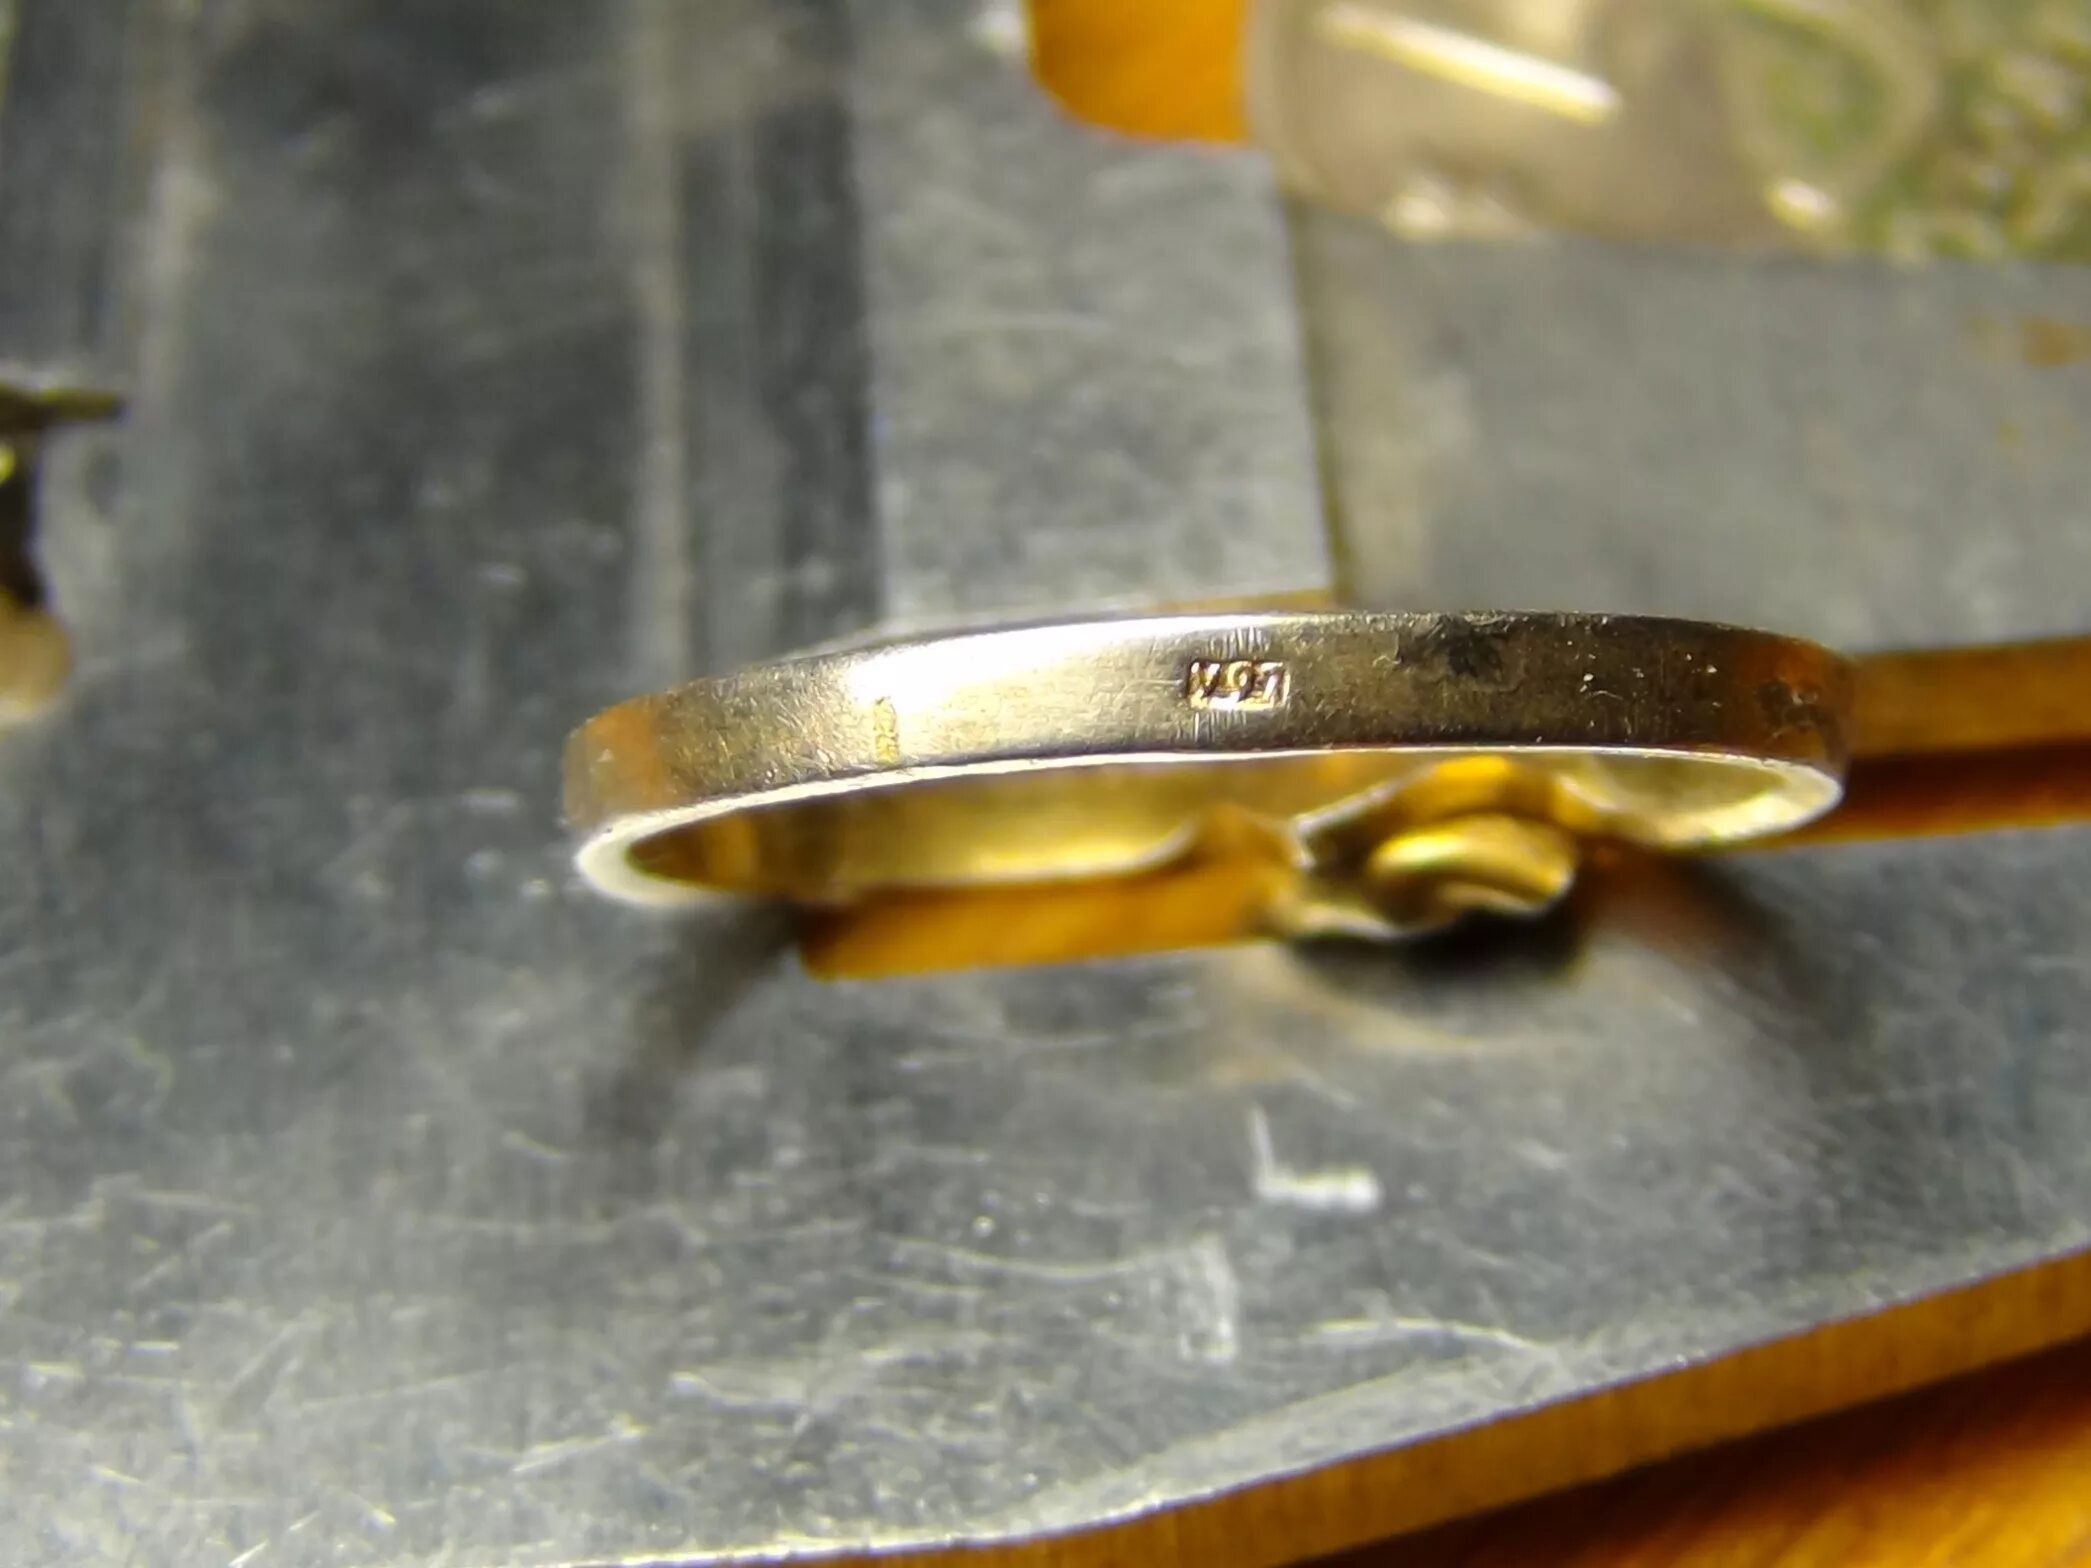 В октябре позолота. Клеймо п6 позолота 6 микрон. :4 МК проба золота. Клеймо на кольце. Проба на кольце.